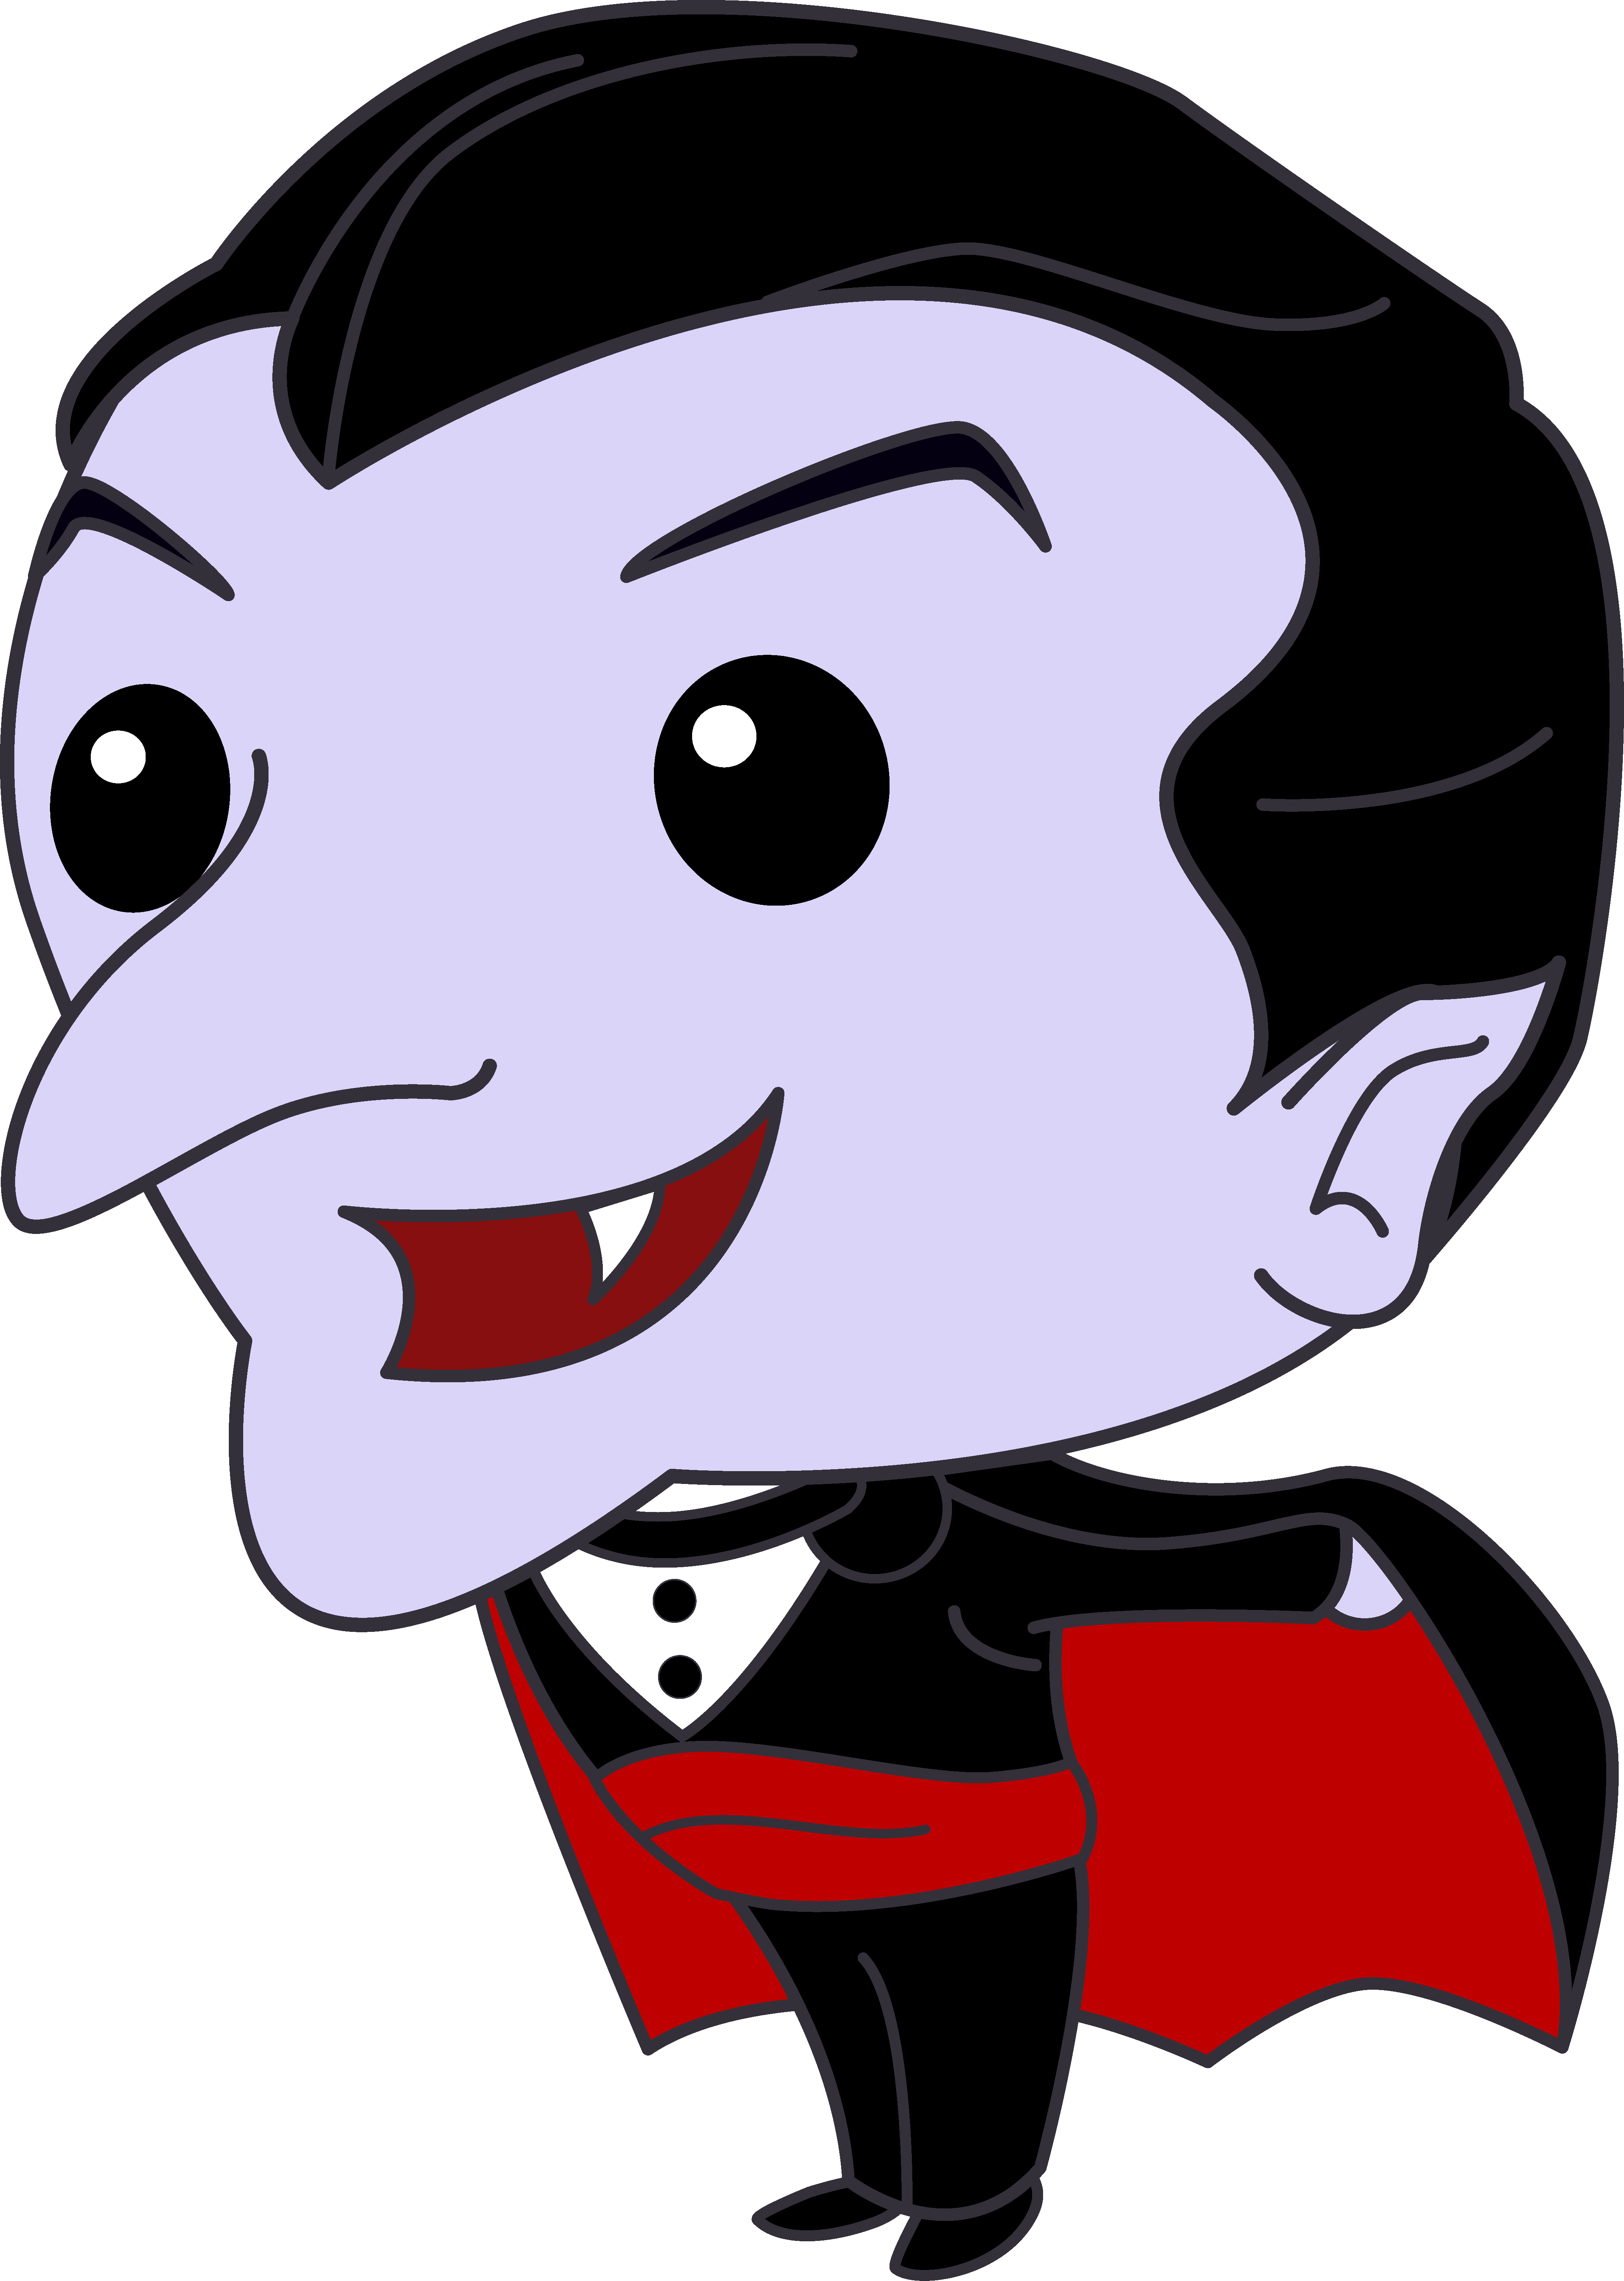 Vampire Cartoon Stock Photos and Images - 123RF